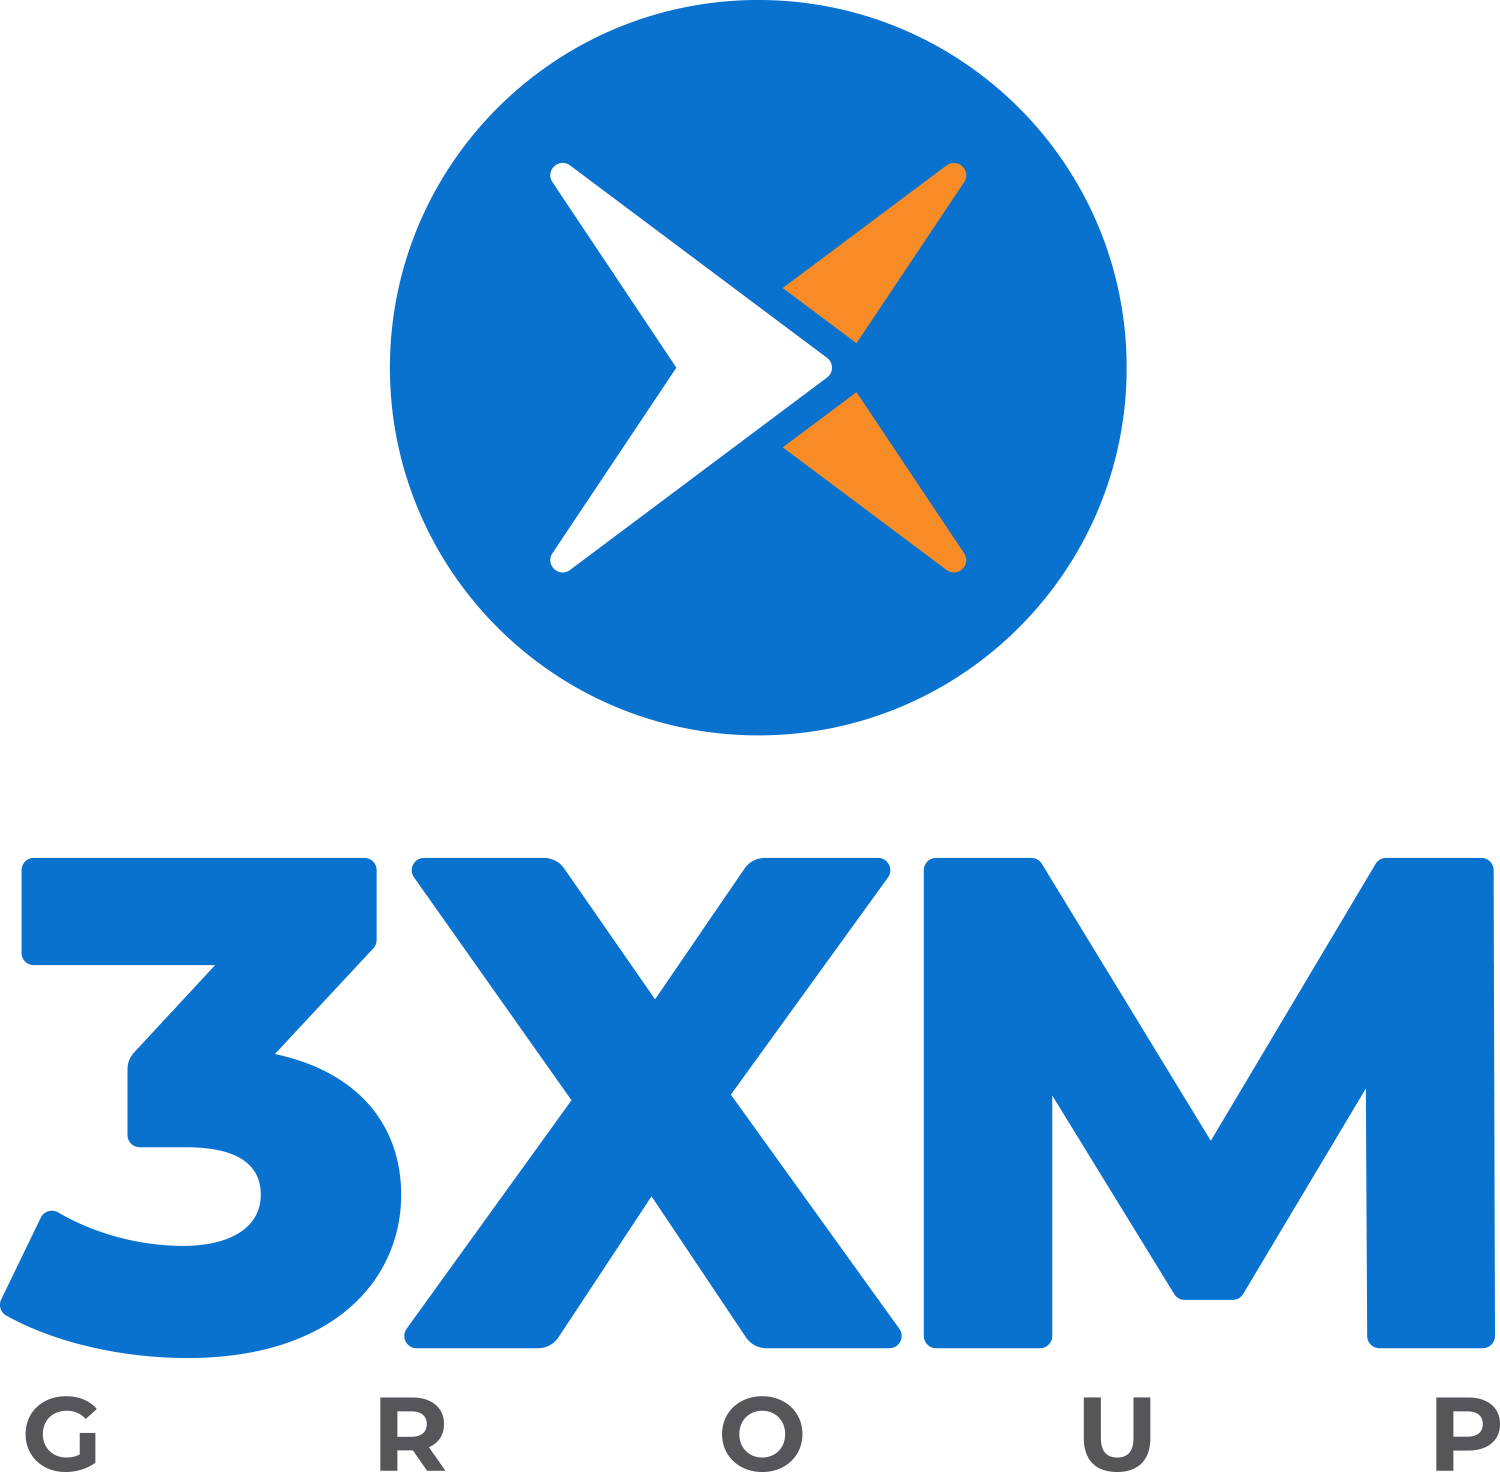 3XM Group